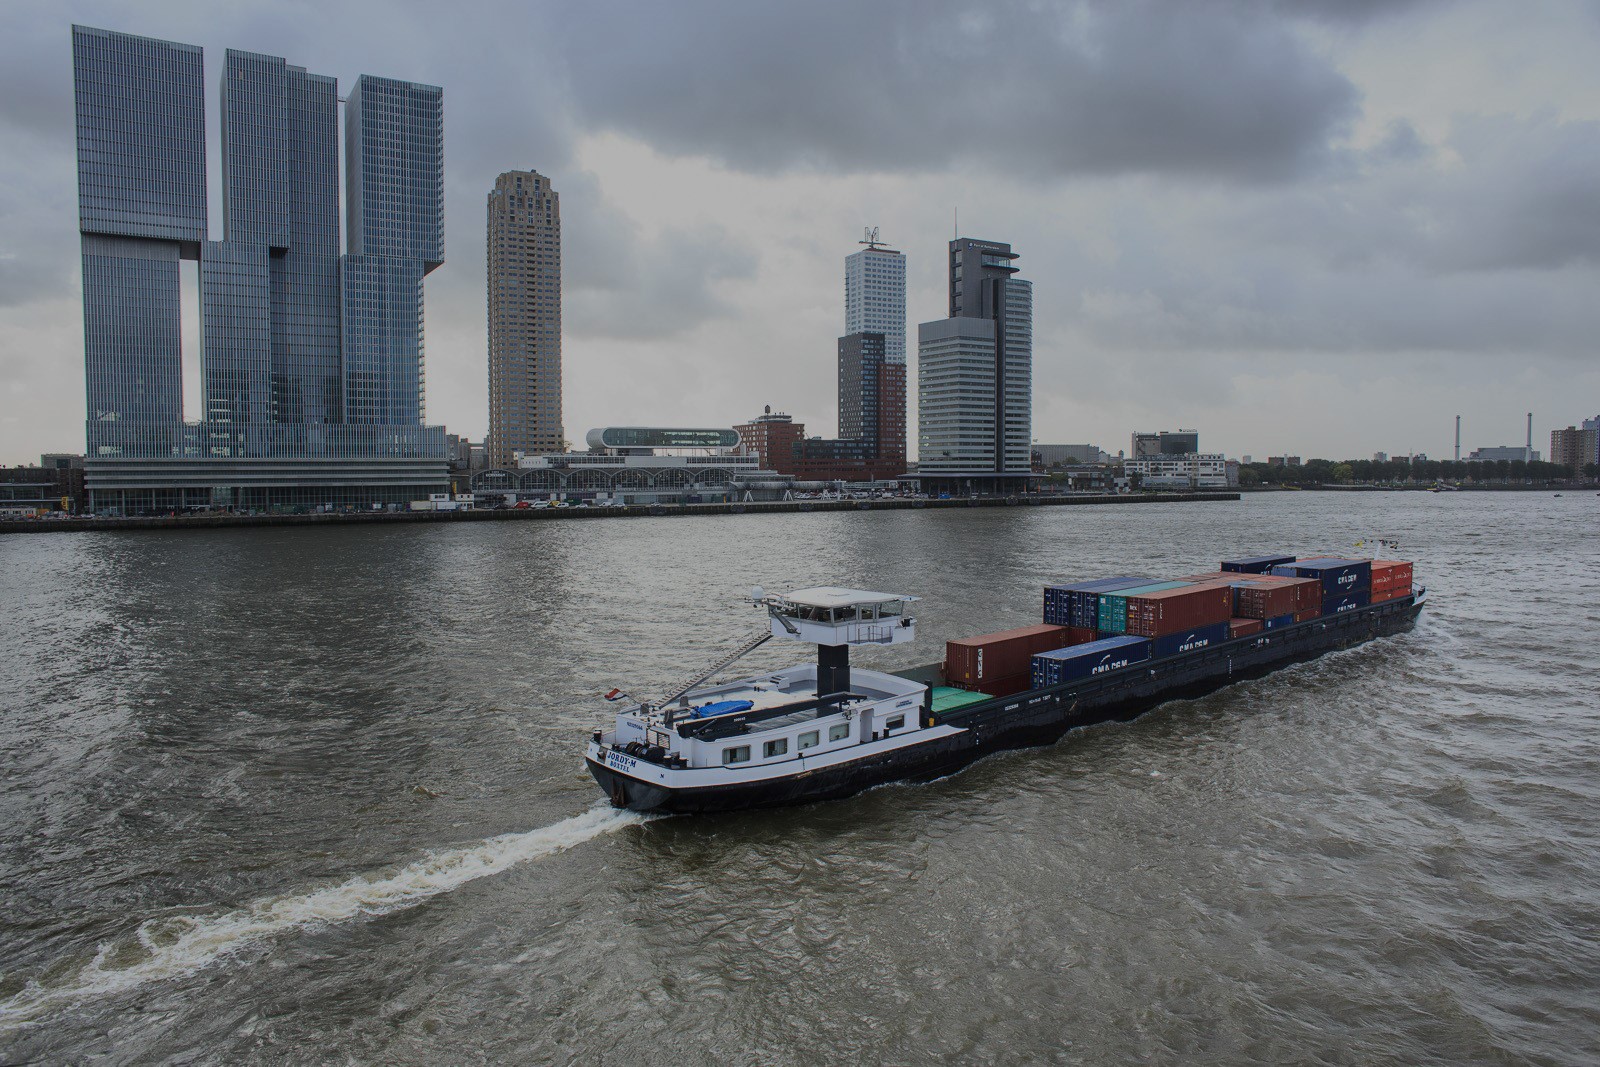 Skyline-Rotterdam-wilhelminakade-3%20HBR-VRIJ